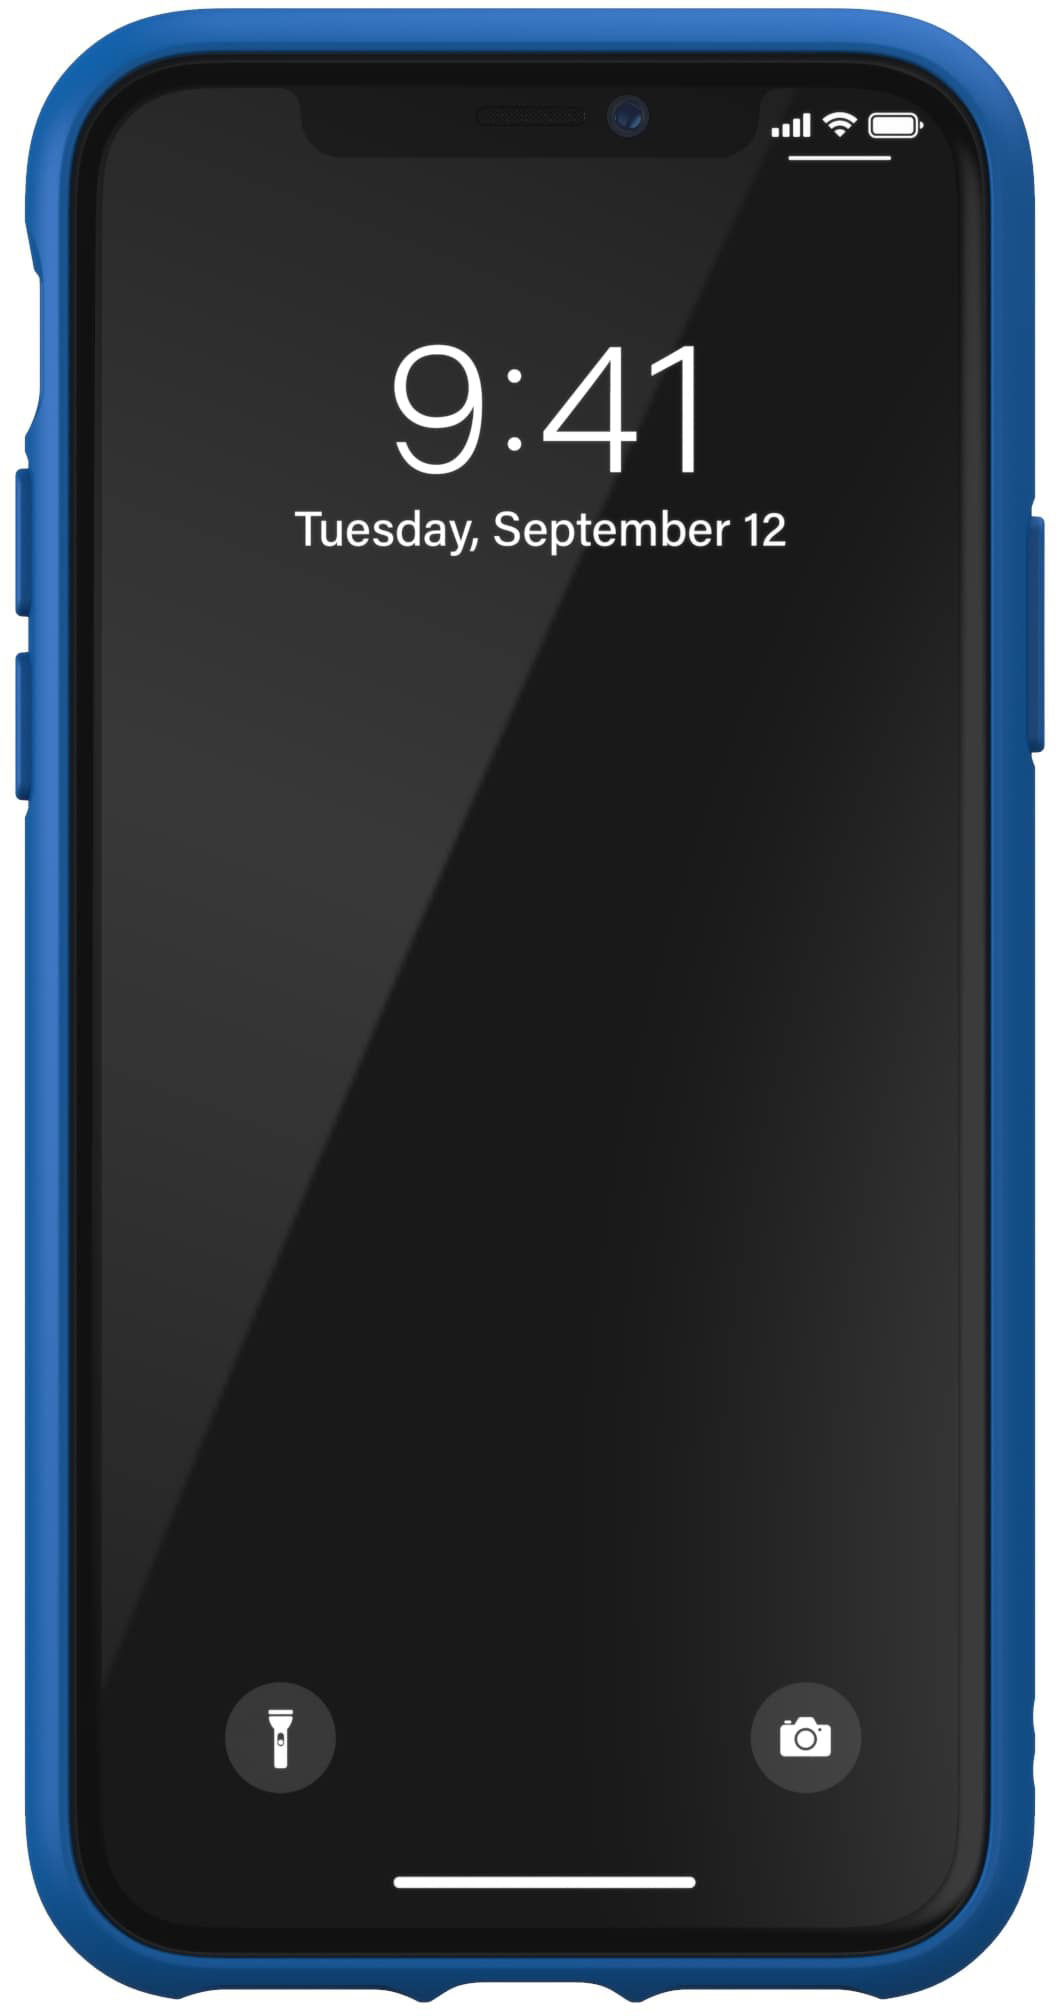 ADIDAS ORIGINALS Moulded Case BASIC, Blau/Weiß Apple, iPhone Backcover, Pro, 11